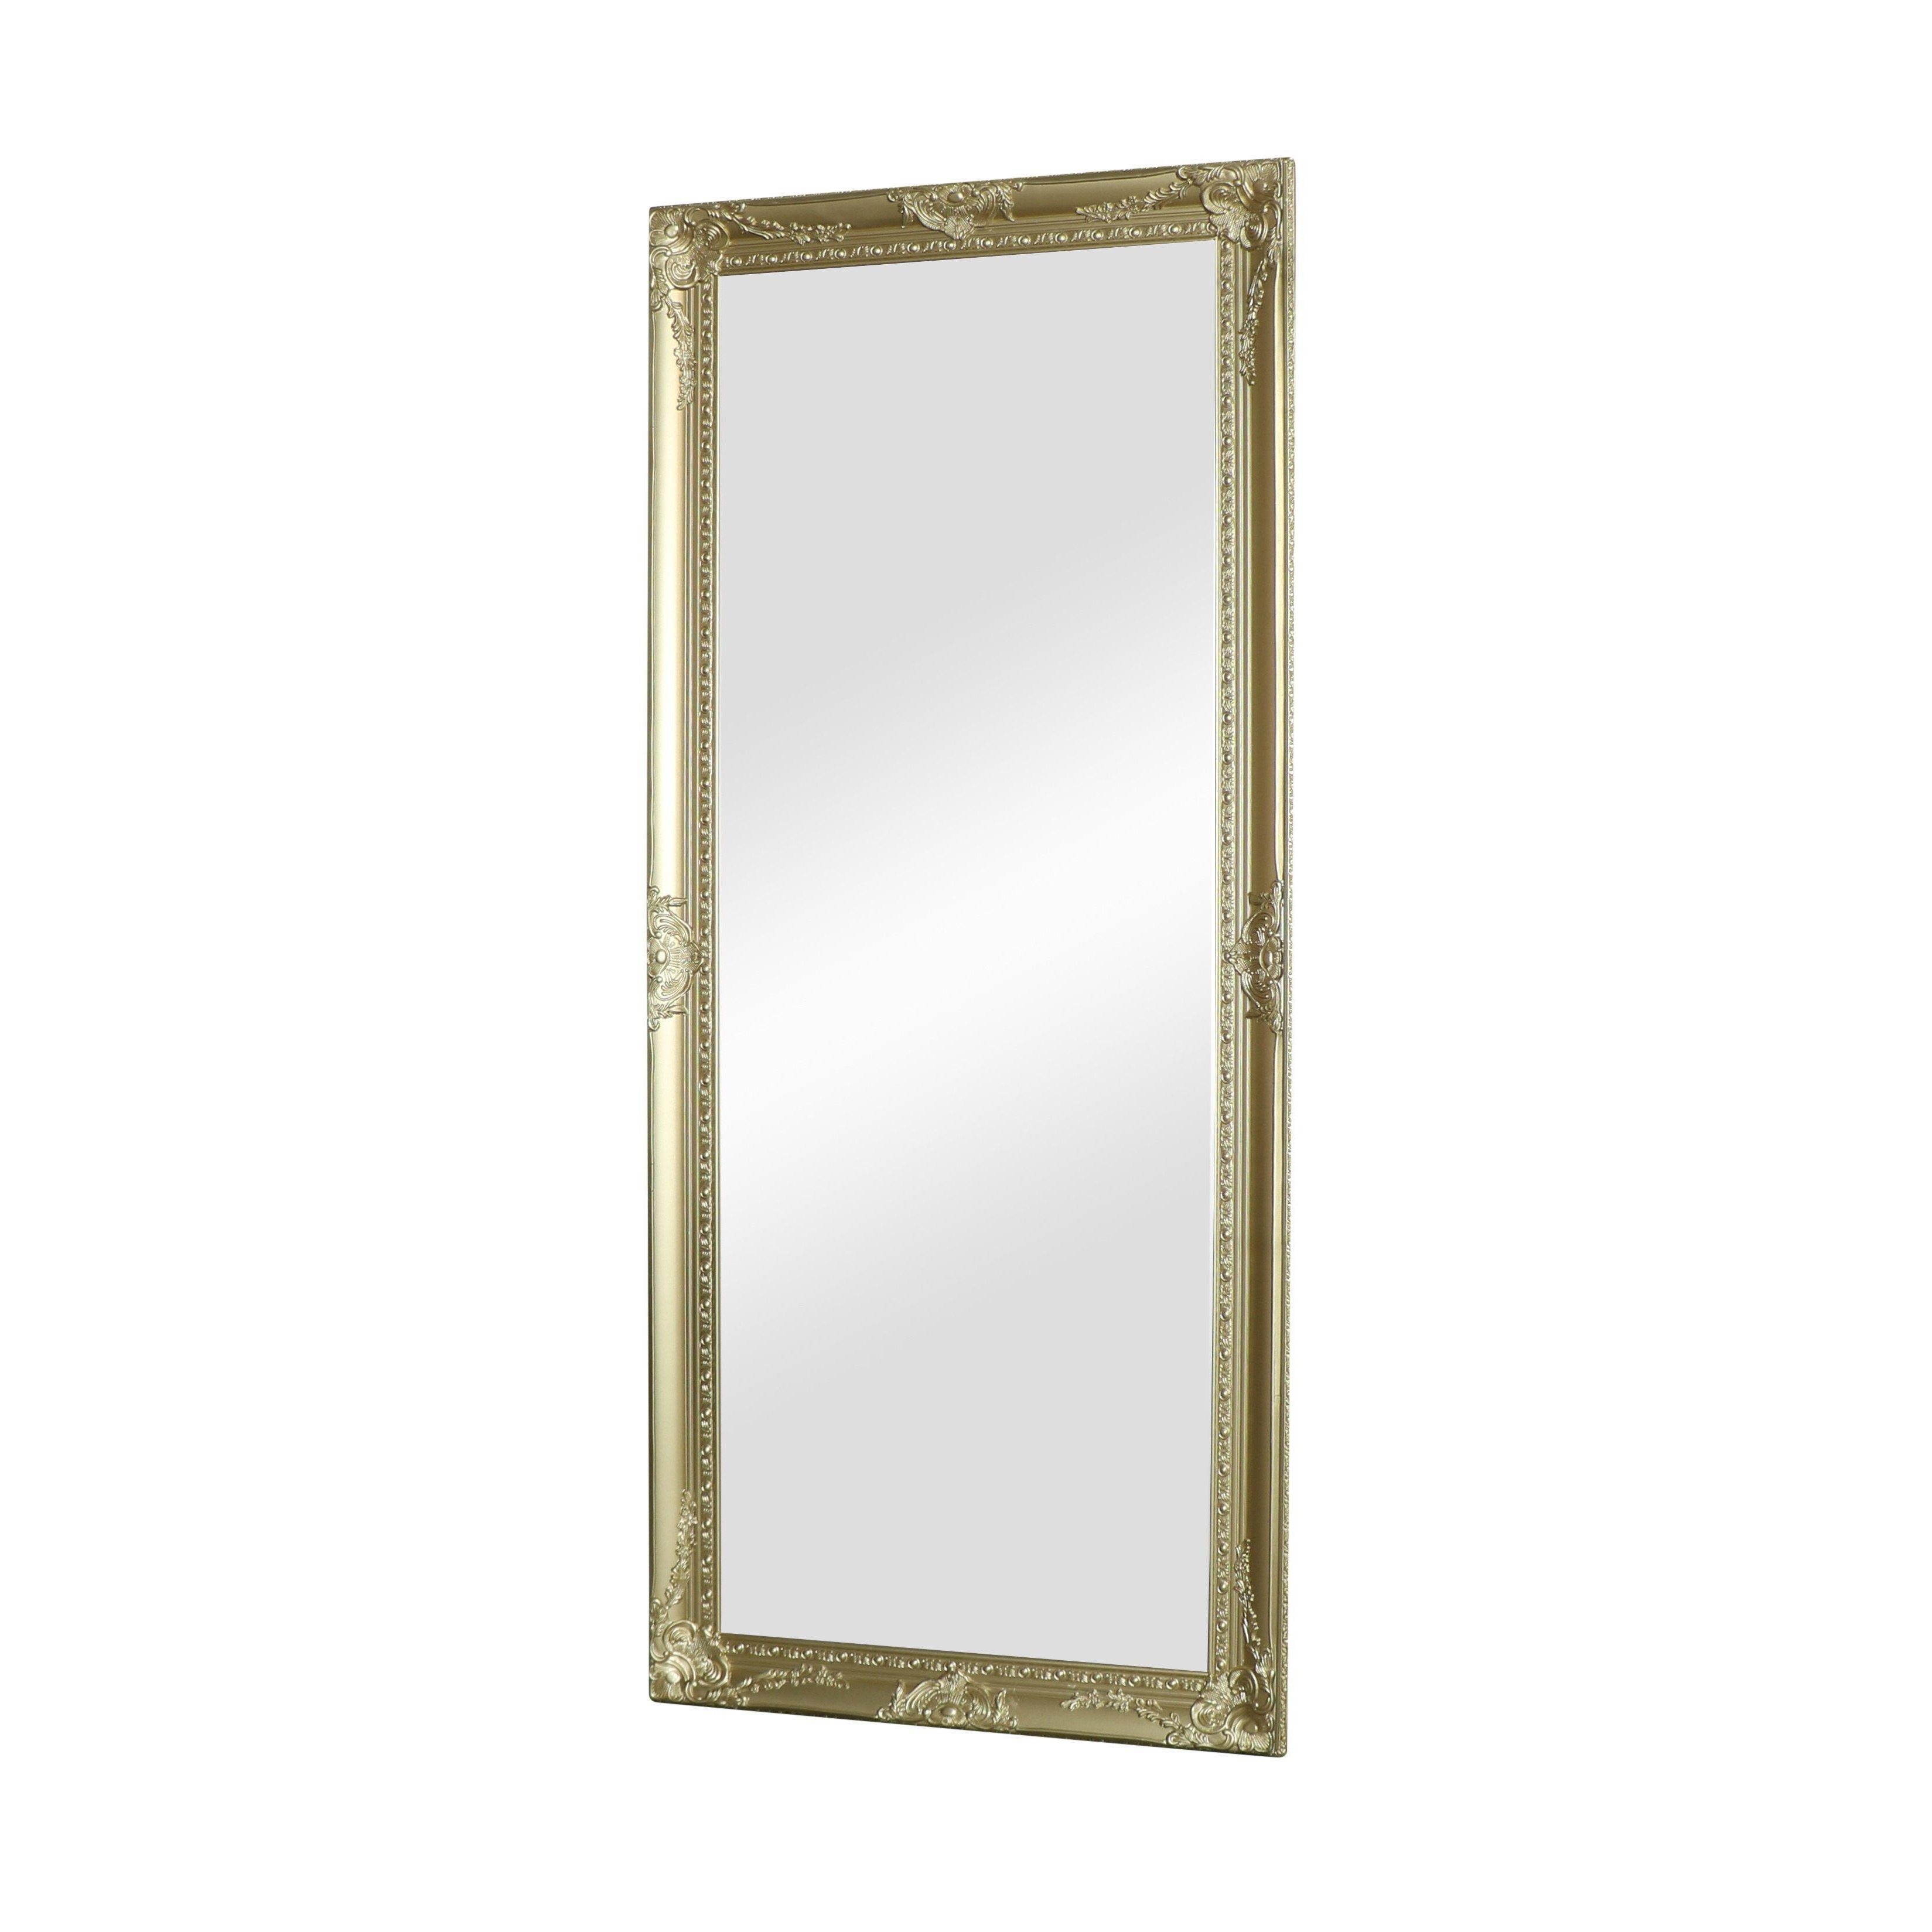 Large Ornate Gold Wall/Floor Mirror 76cm X 176cm - image 1